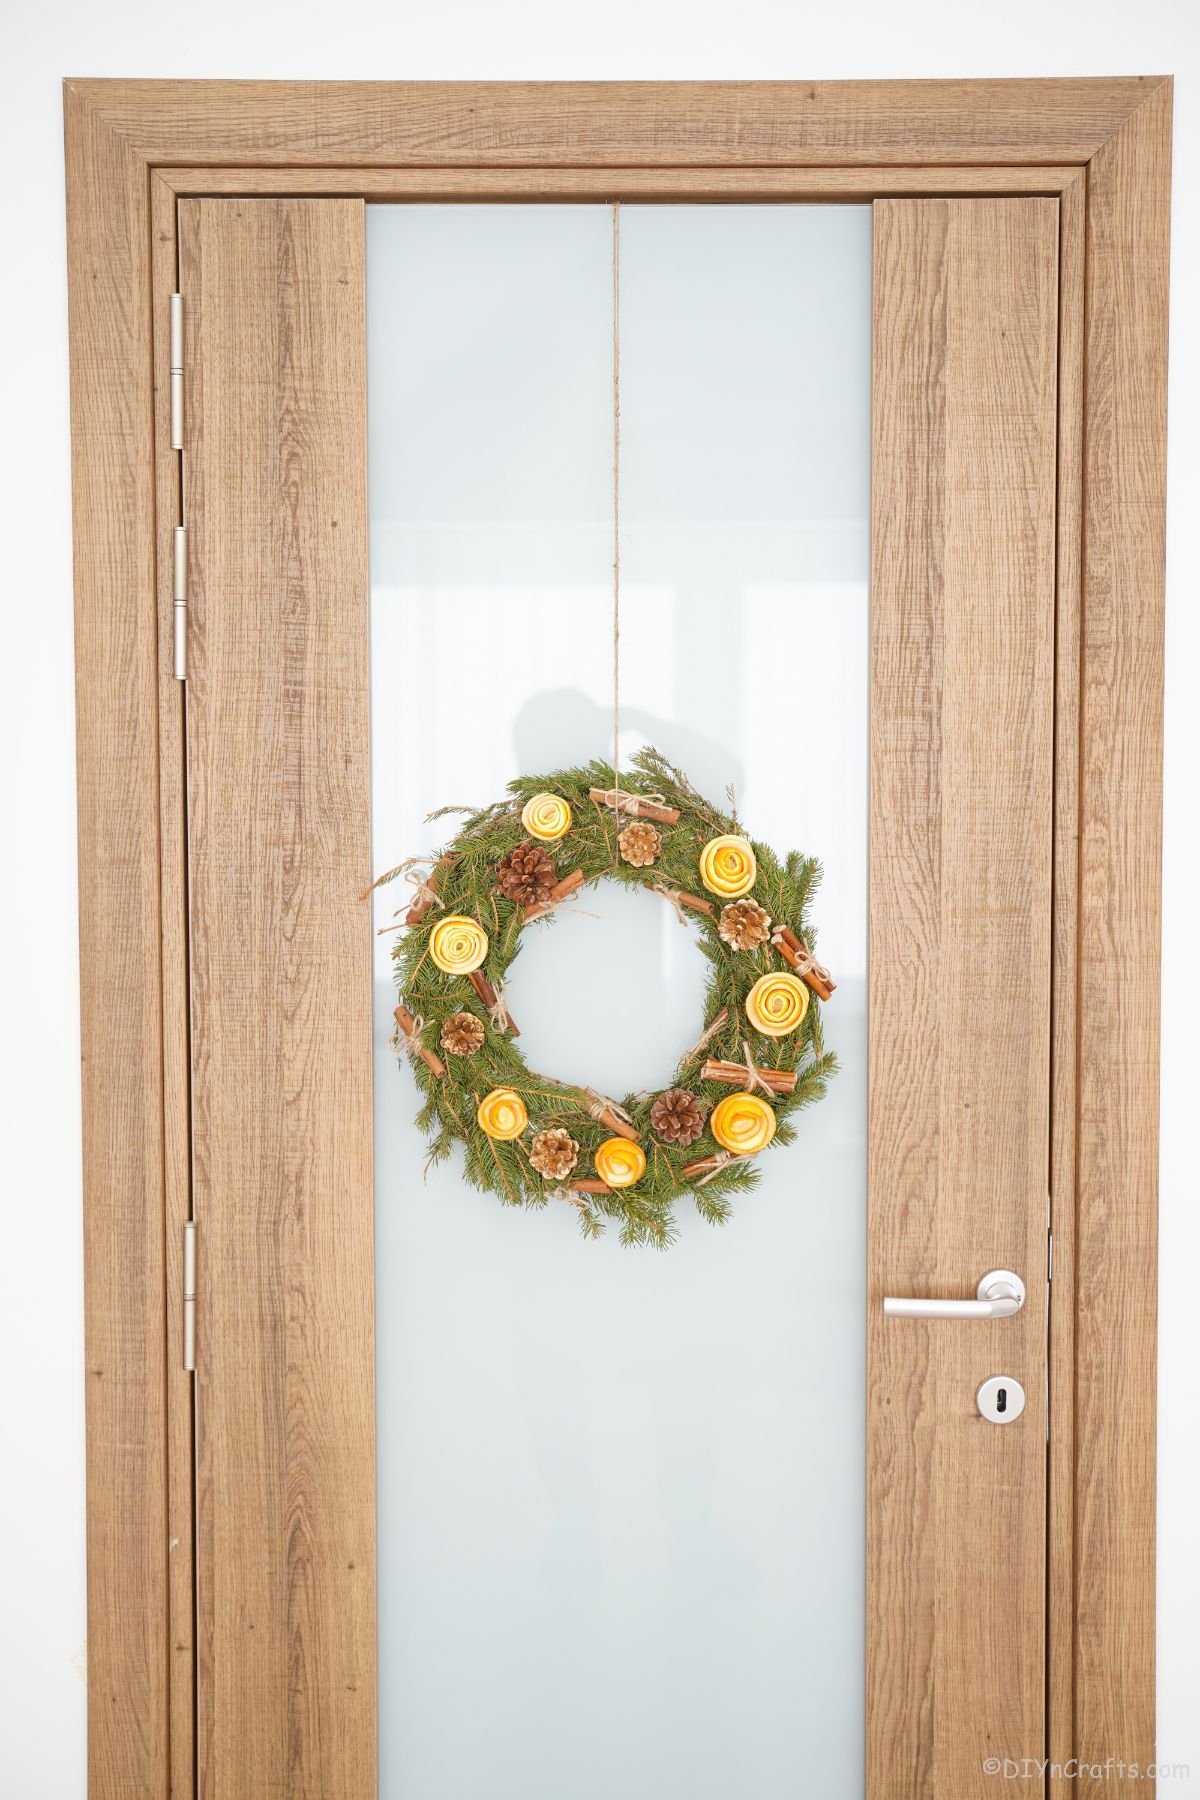 green wreath with orange peel roses on glass door with wood trim